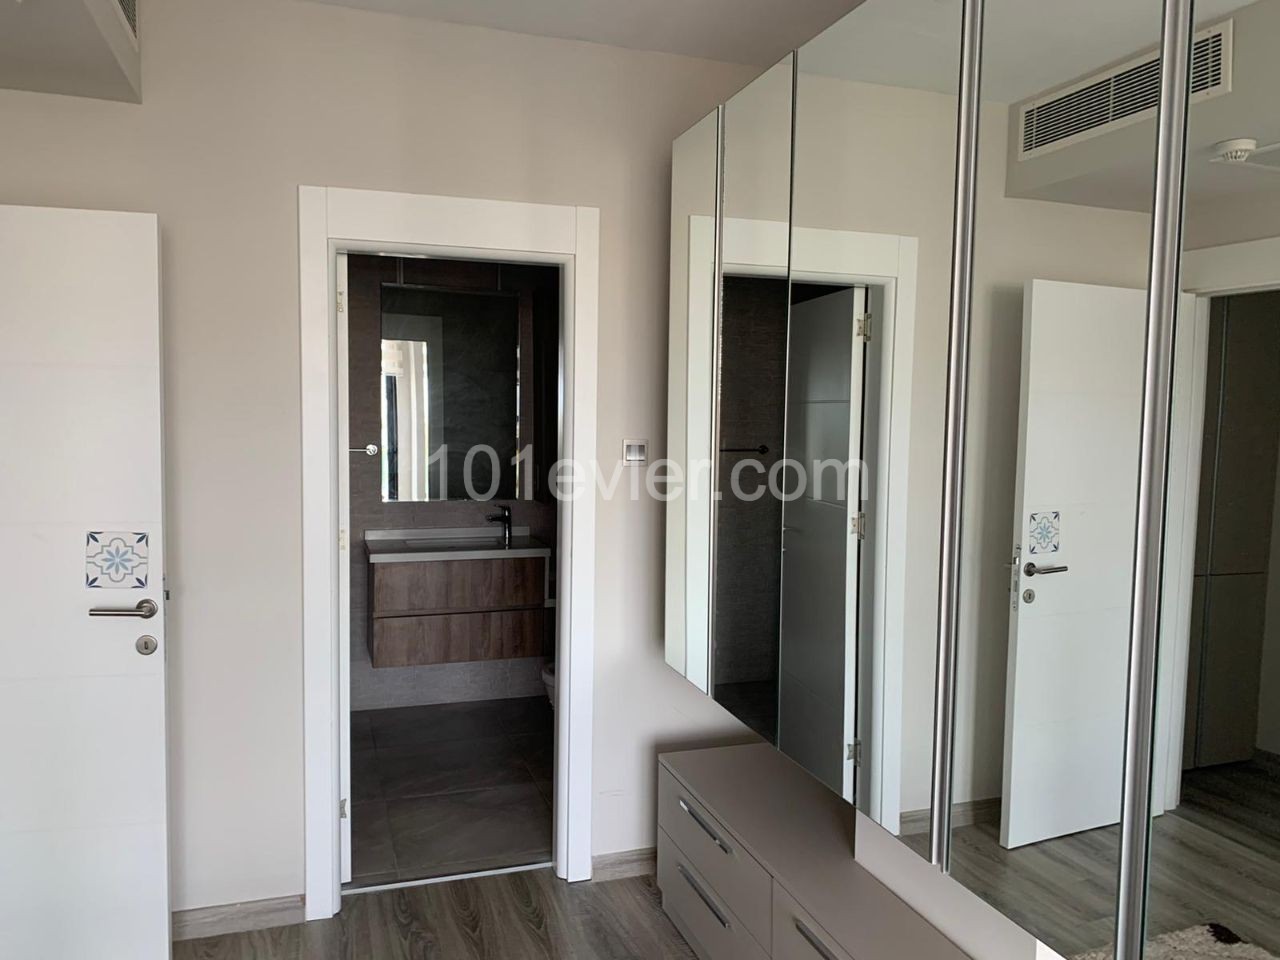 Three Bedroom for Rent in Girne